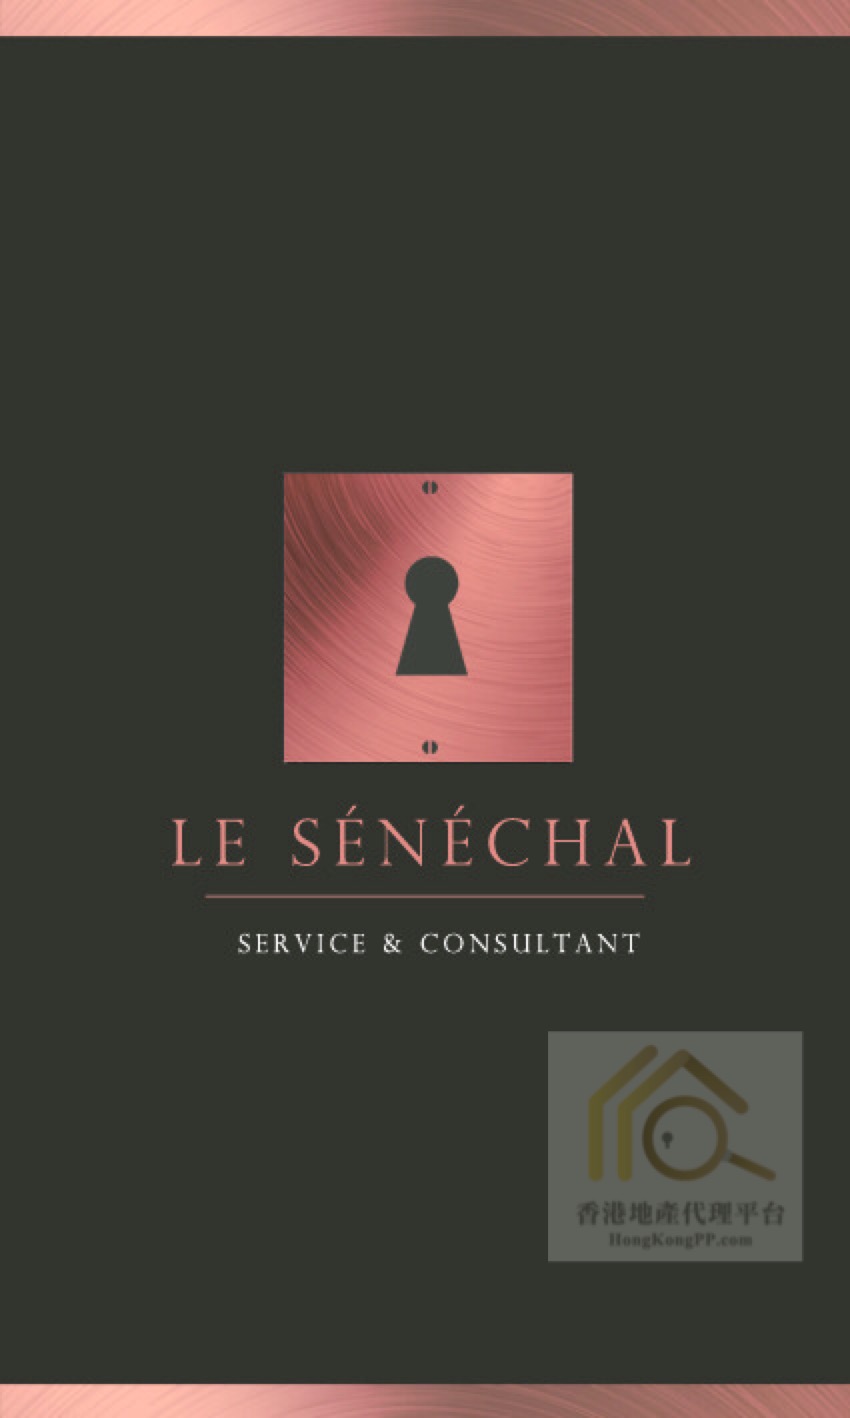 Industrial BuildingEstate Agent: Le Senechal Service & Consultant Company Limited